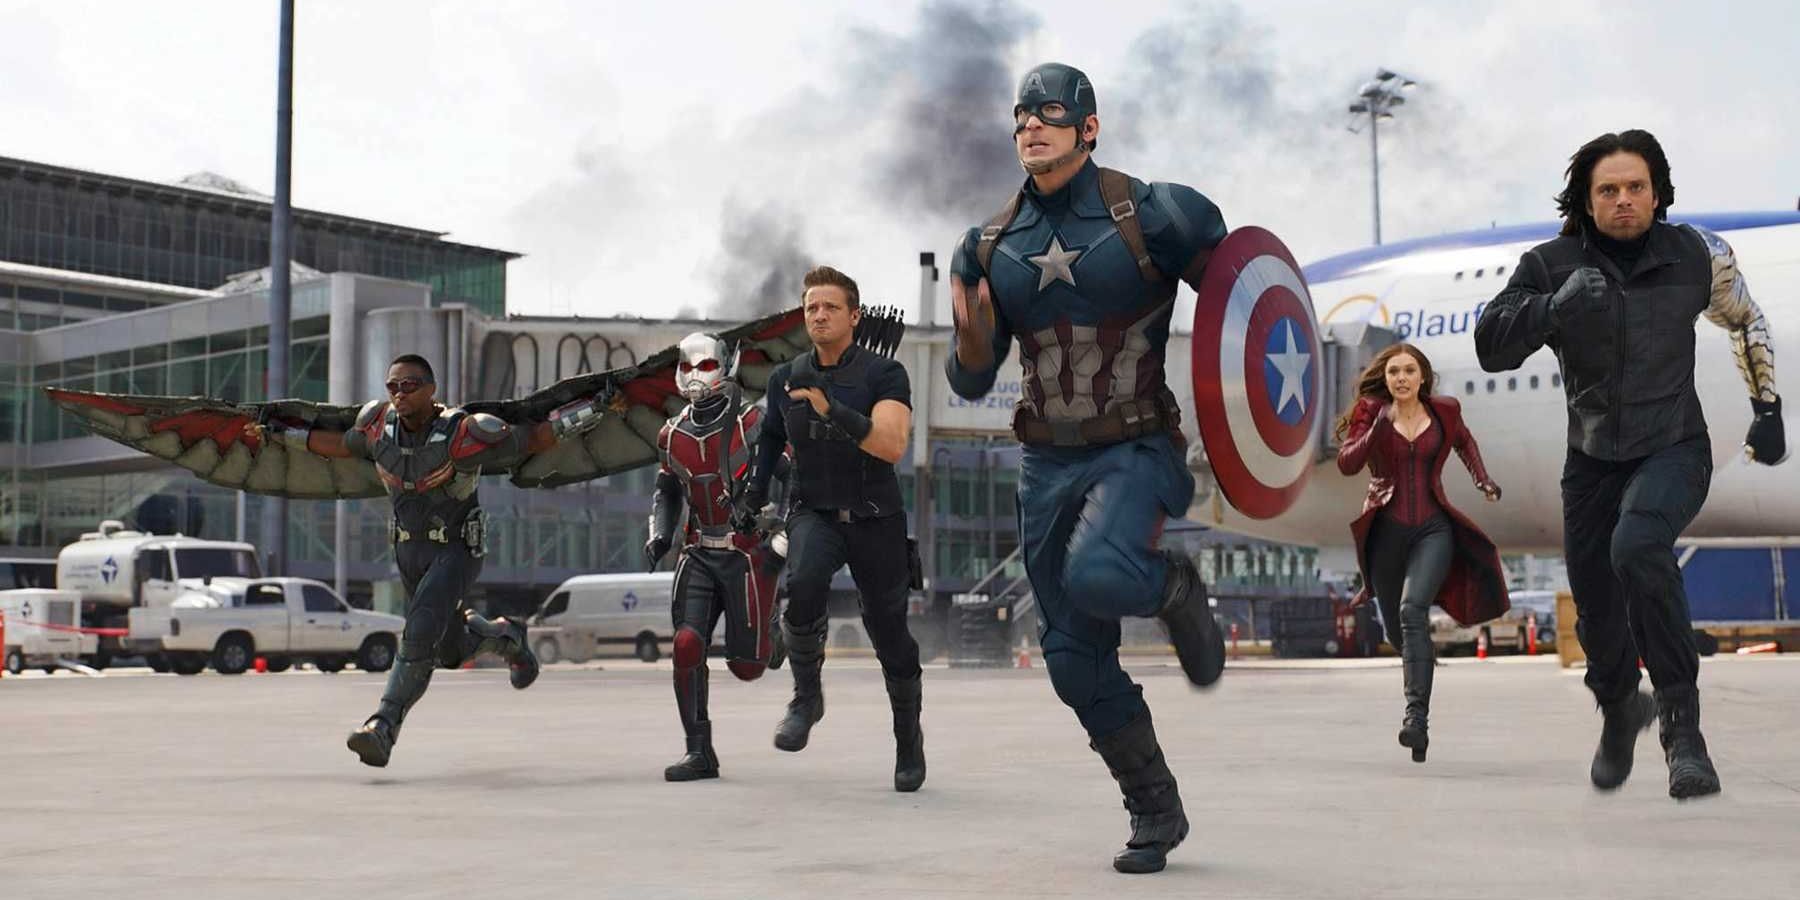 The airport battle in Captain America Civil War